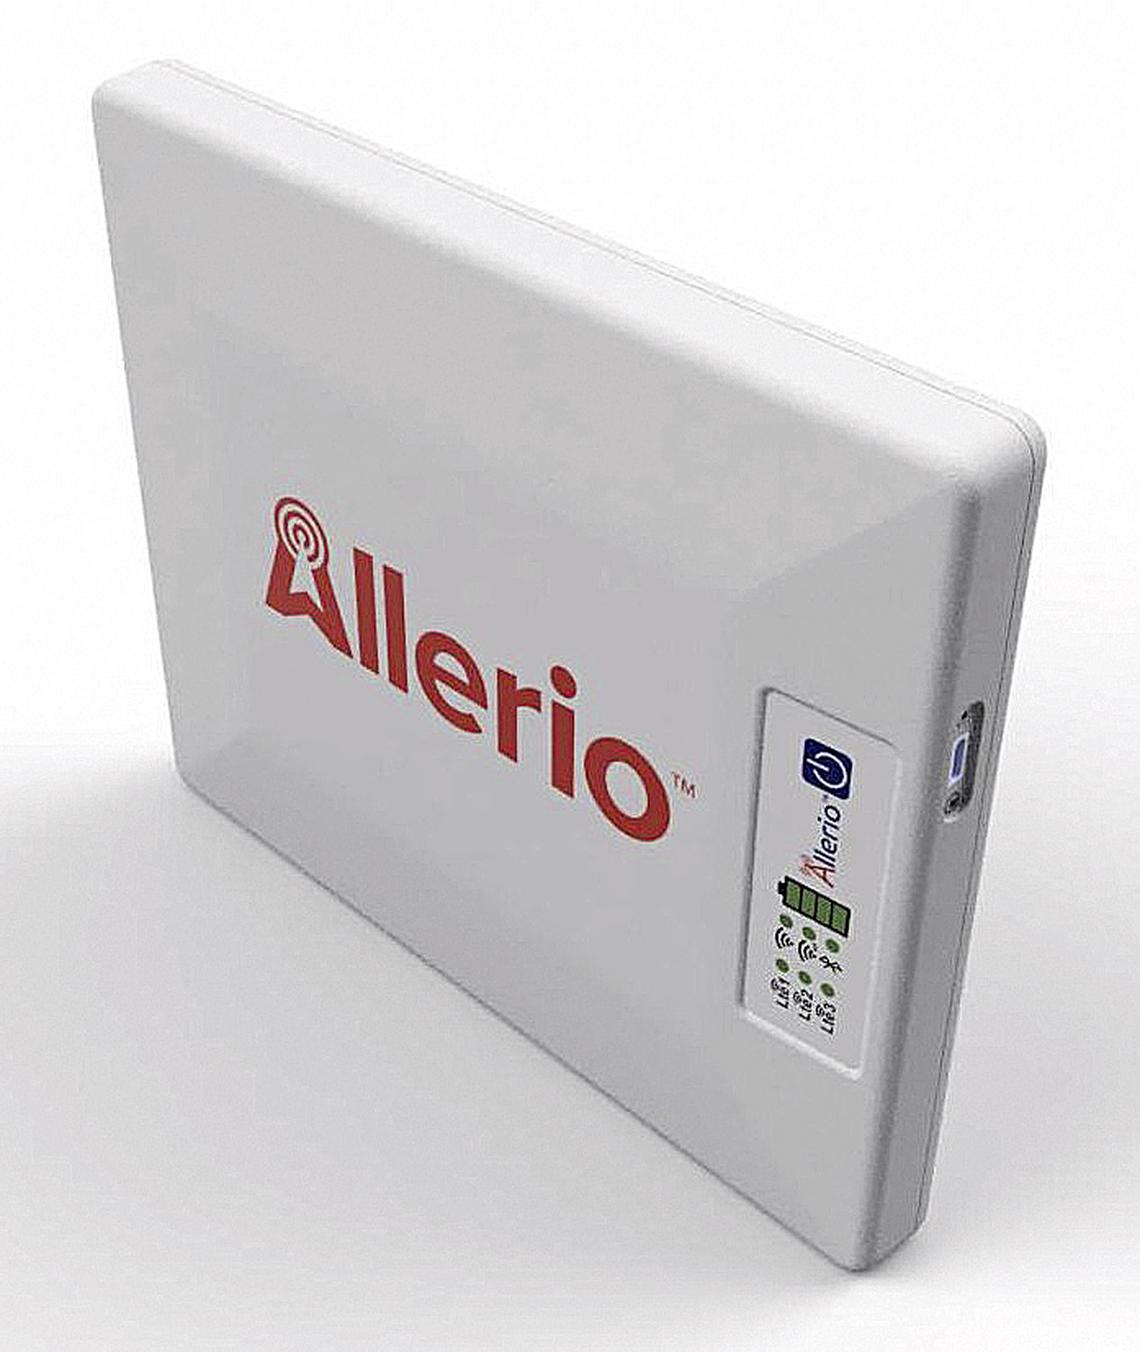 Allerio Mobile Hub